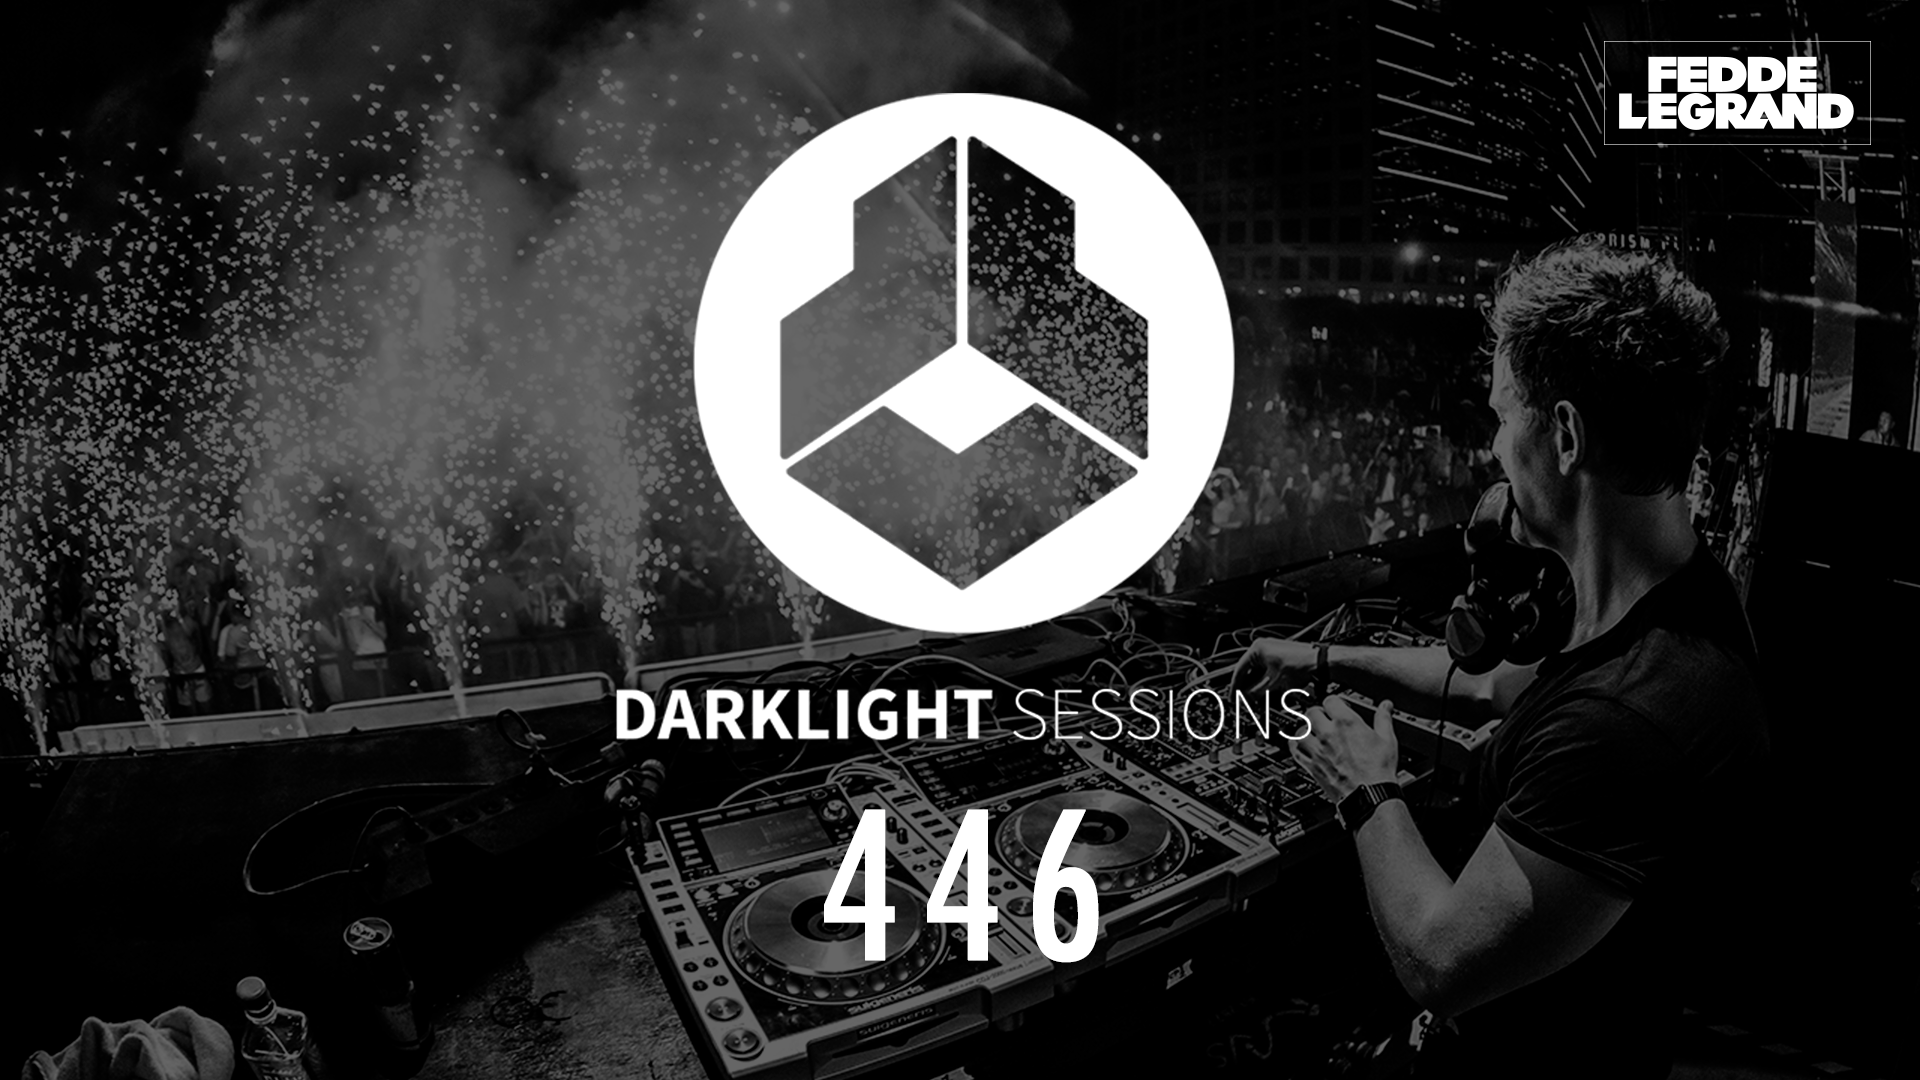 Darklight Sessions 446